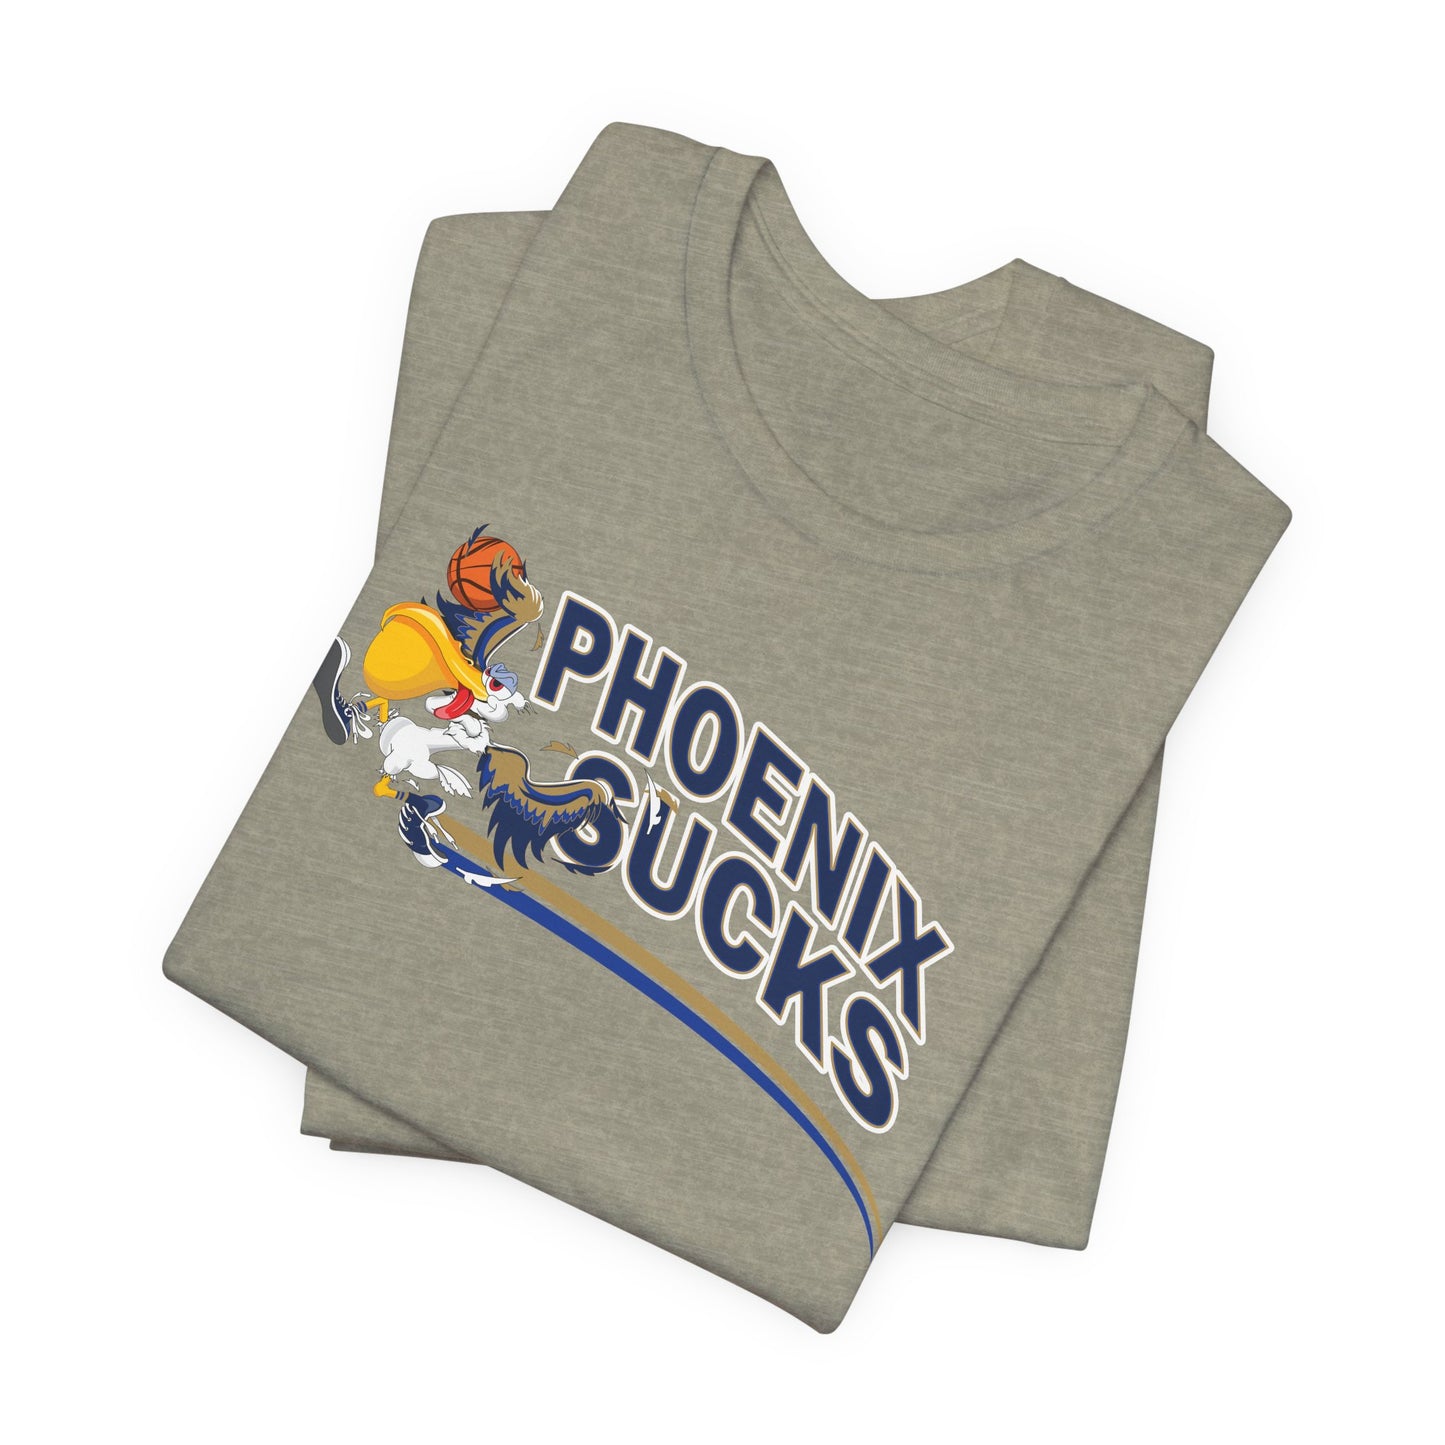 Phx Sucks (for Pelicans fans) - Unisex Jersey Short Sleeve Tee